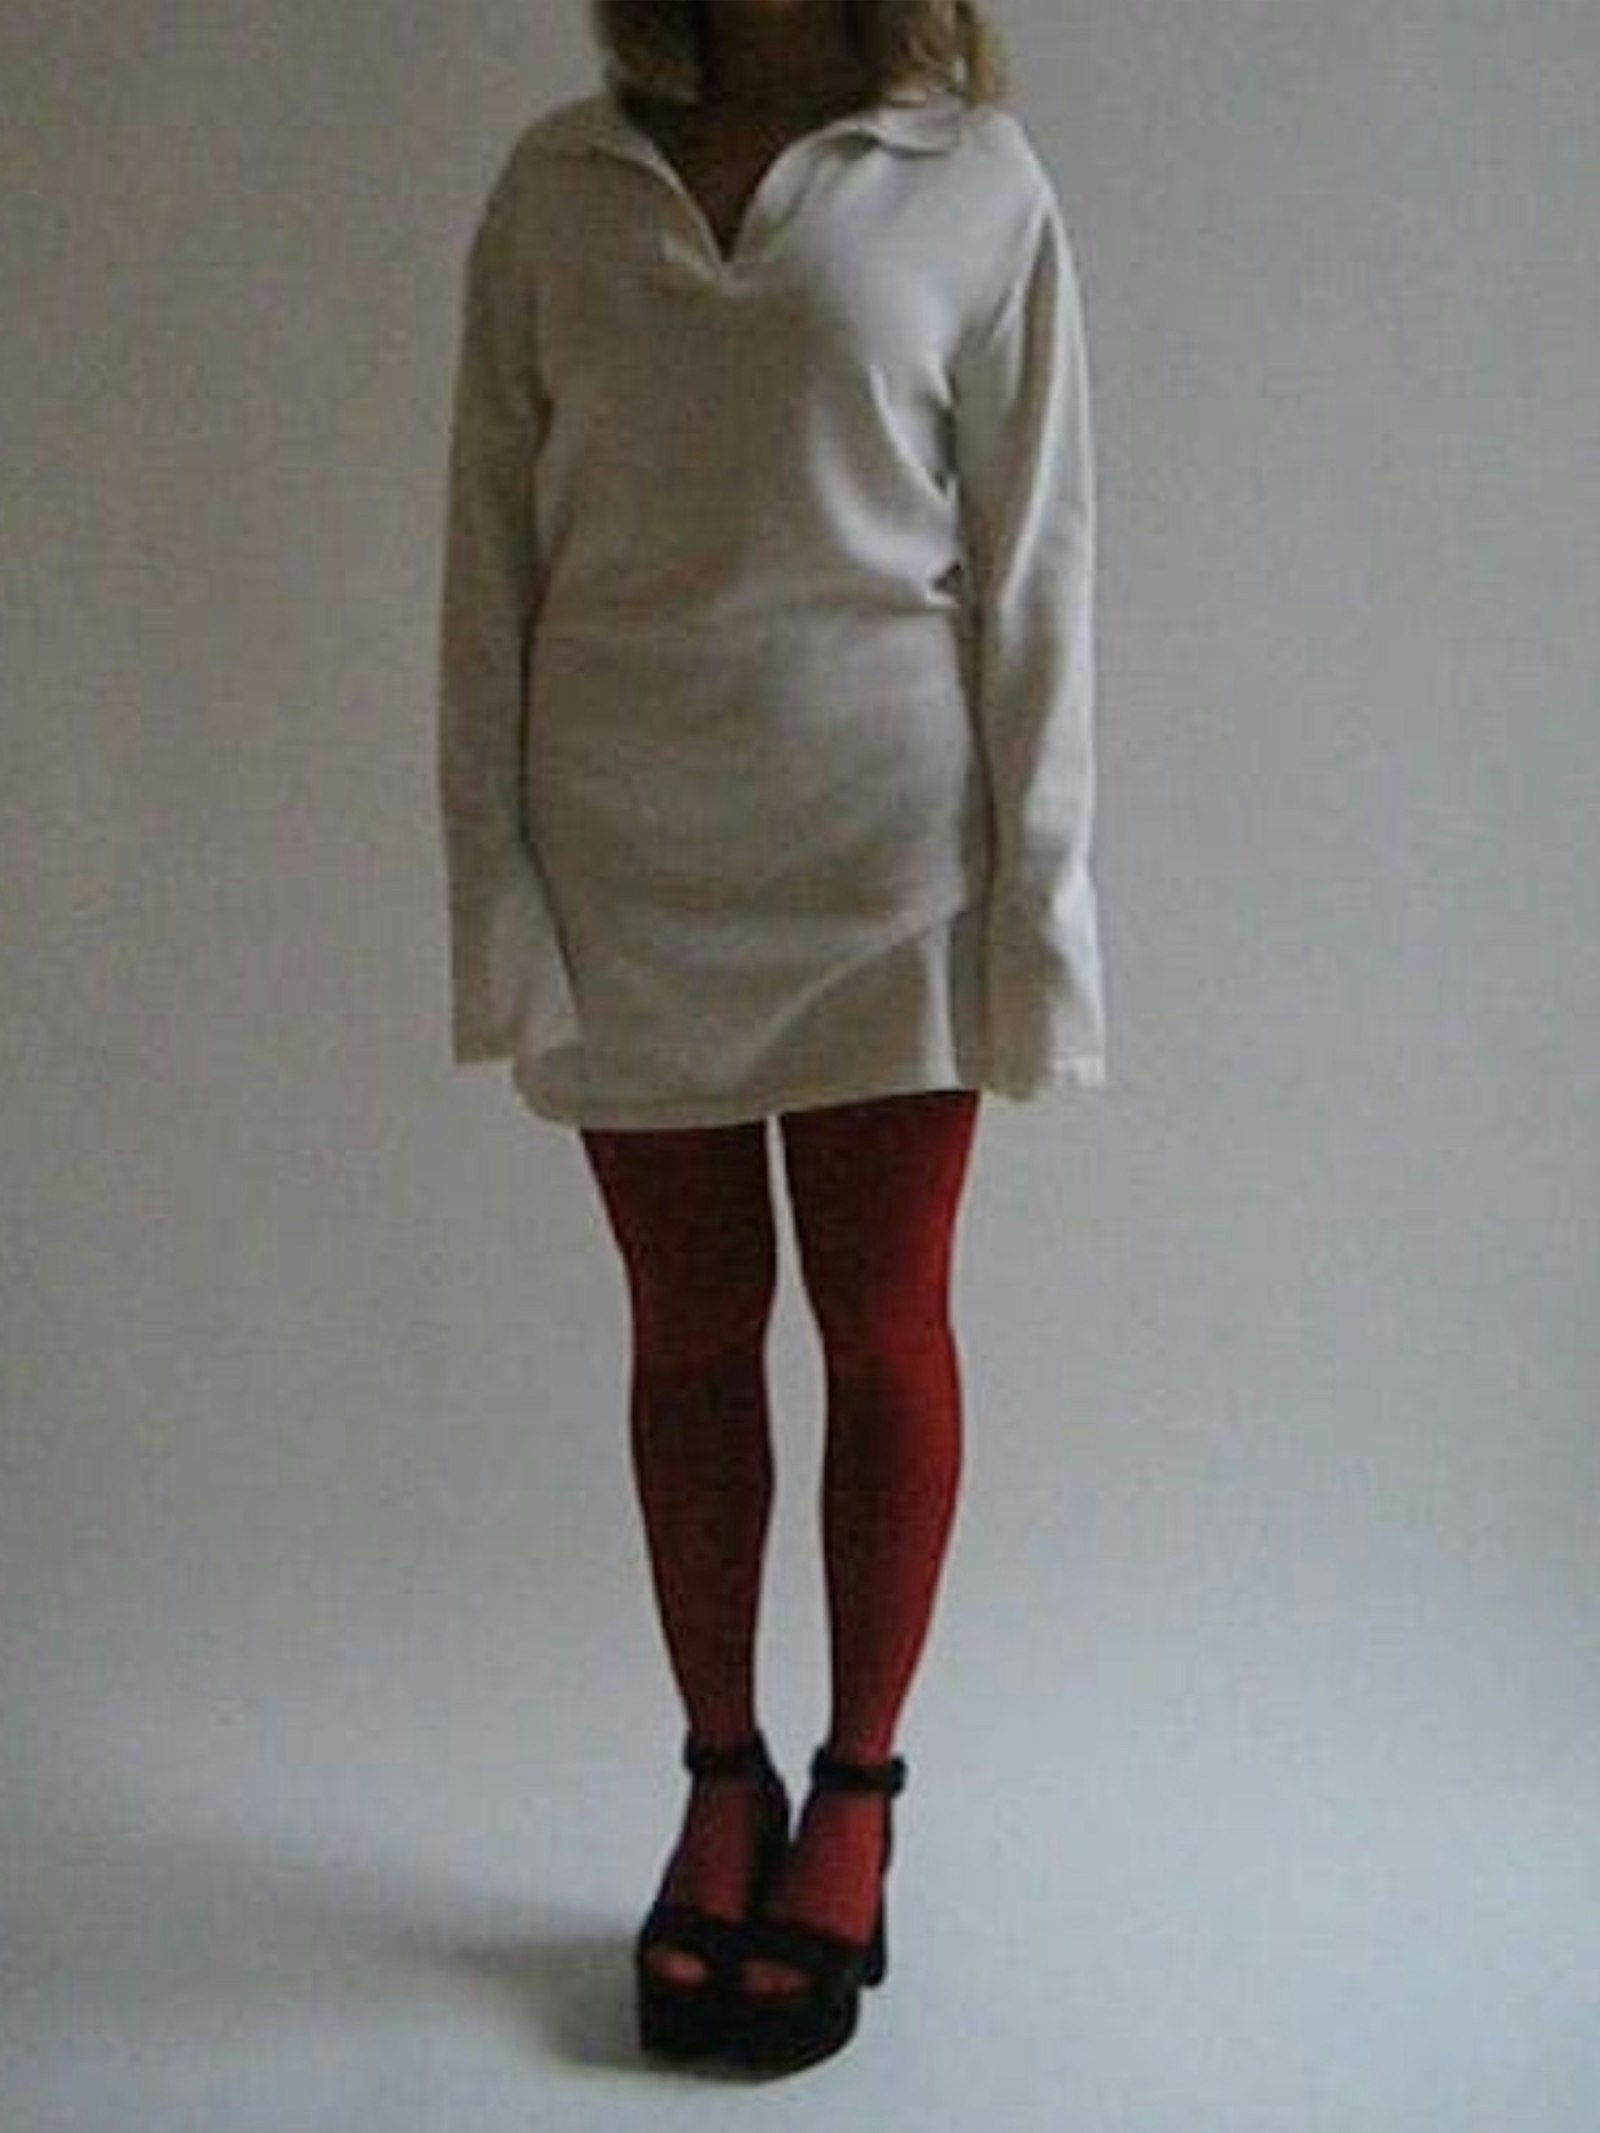 Djerf Avenue - Getaway Dress on Designer Wardrobe